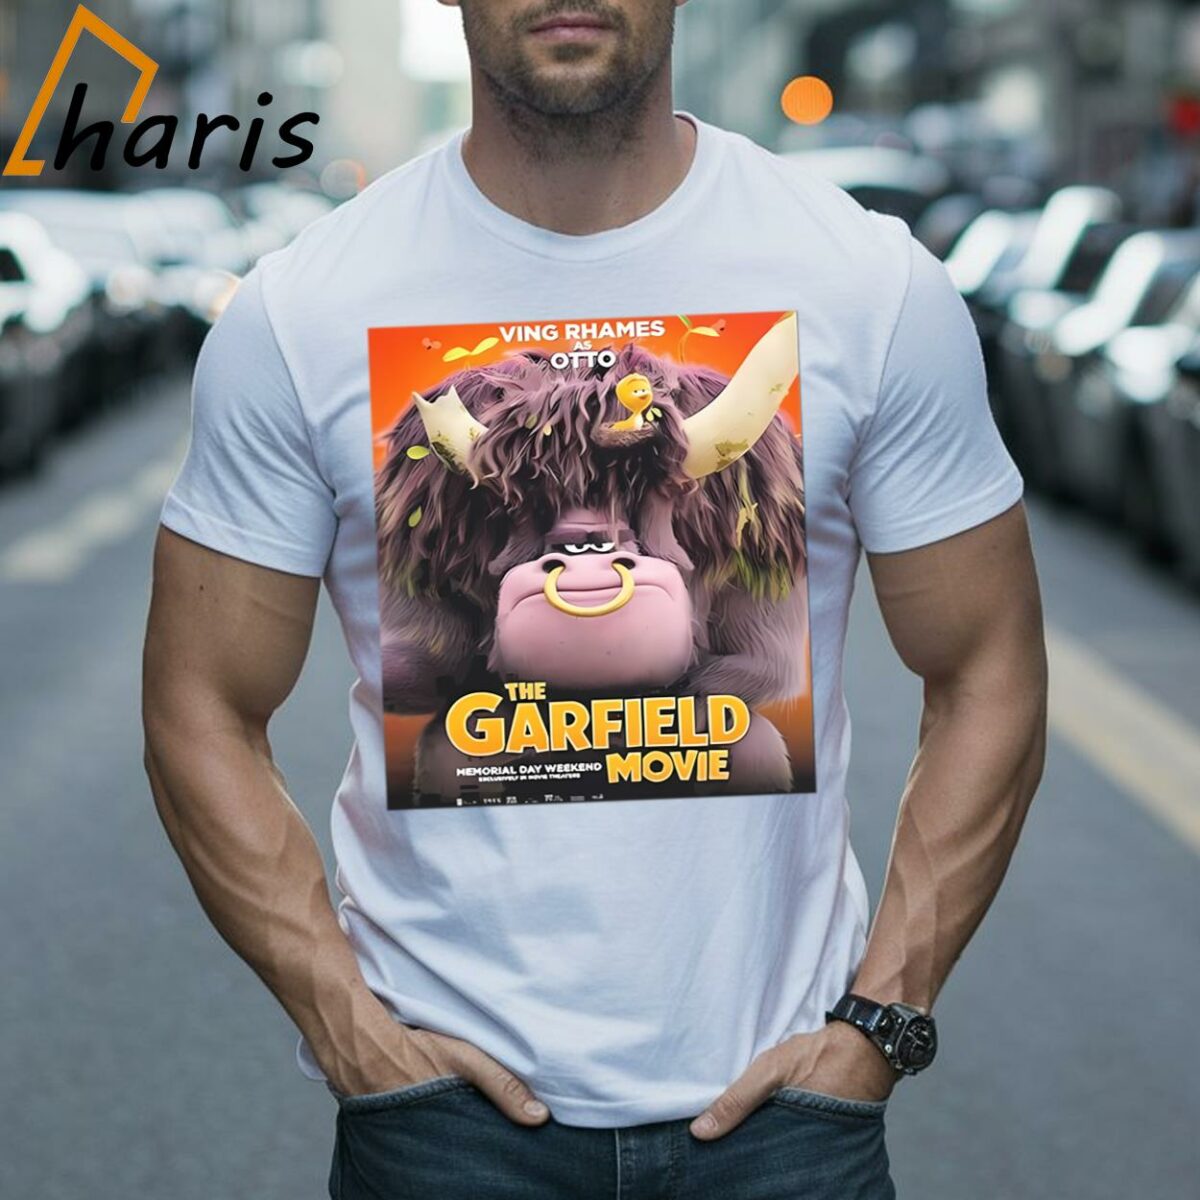 Ving Rhames As Otto In The Garfield Movie Shirt 2 Shirt